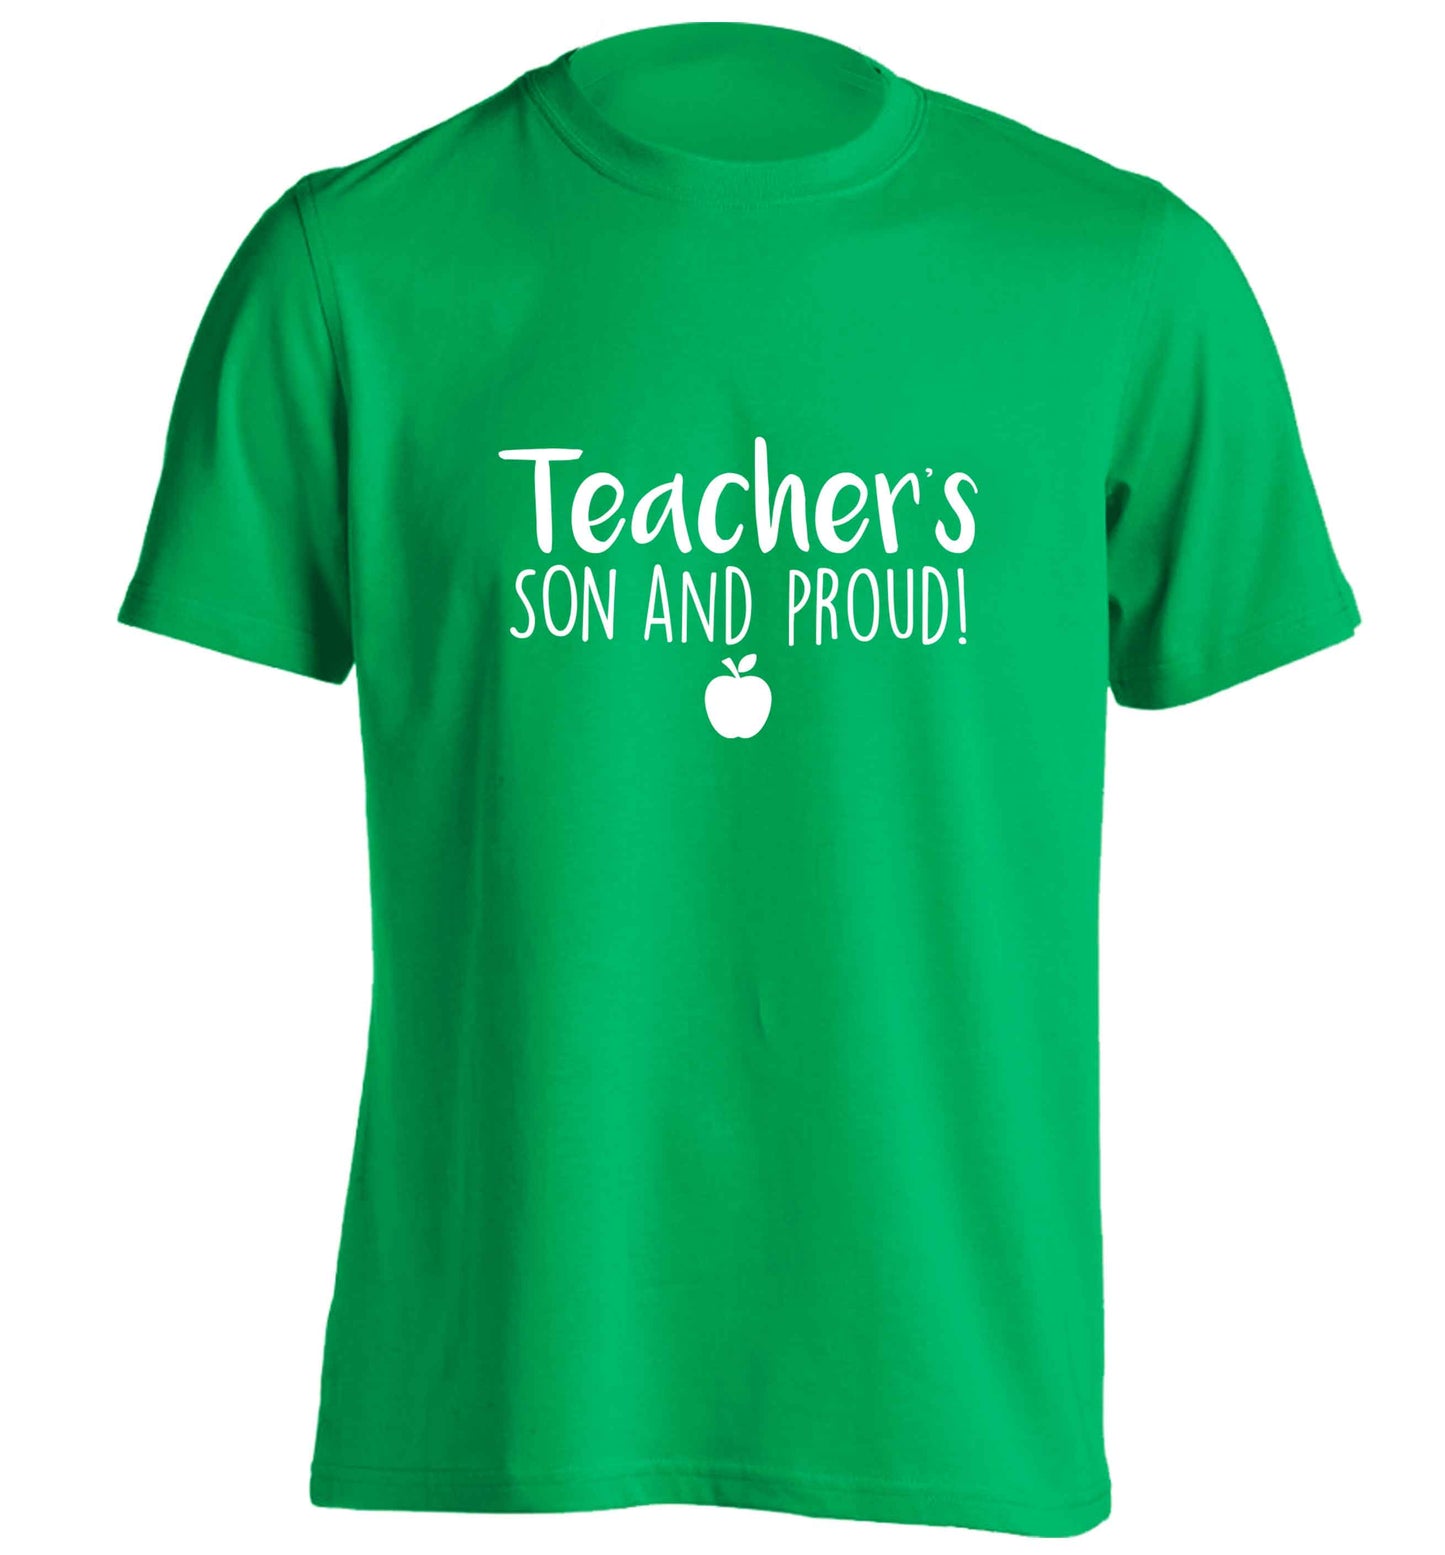 Teachers son and proud adults unisex green Tshirt 2XL